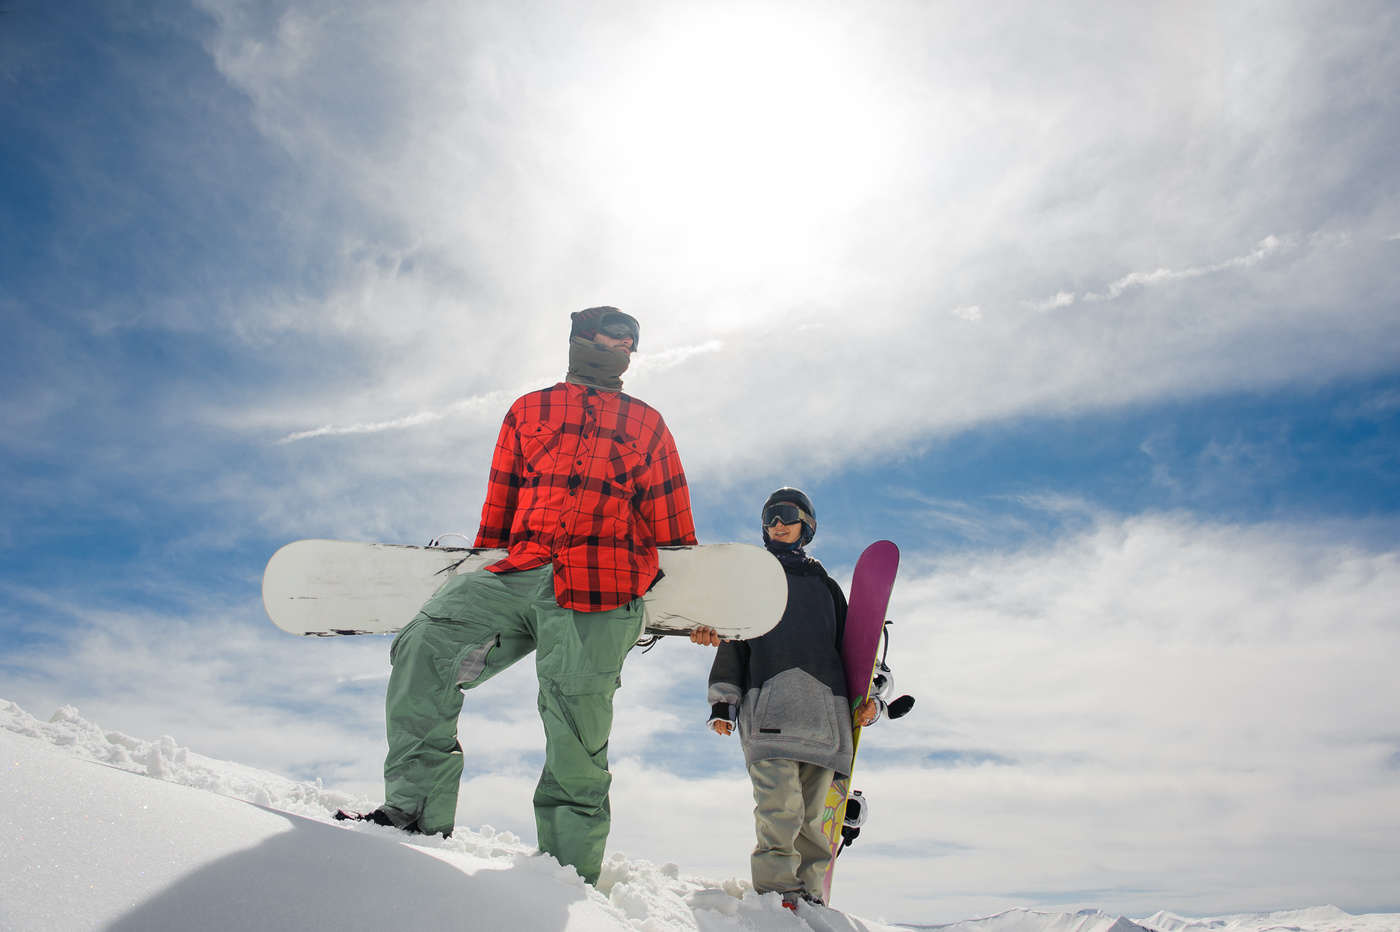 Orolay レディース スキーウェア スノーボード アウトドアジャケット 防風防水 保温 多機能ウエア 耐水圧10,000mm(レッド,M